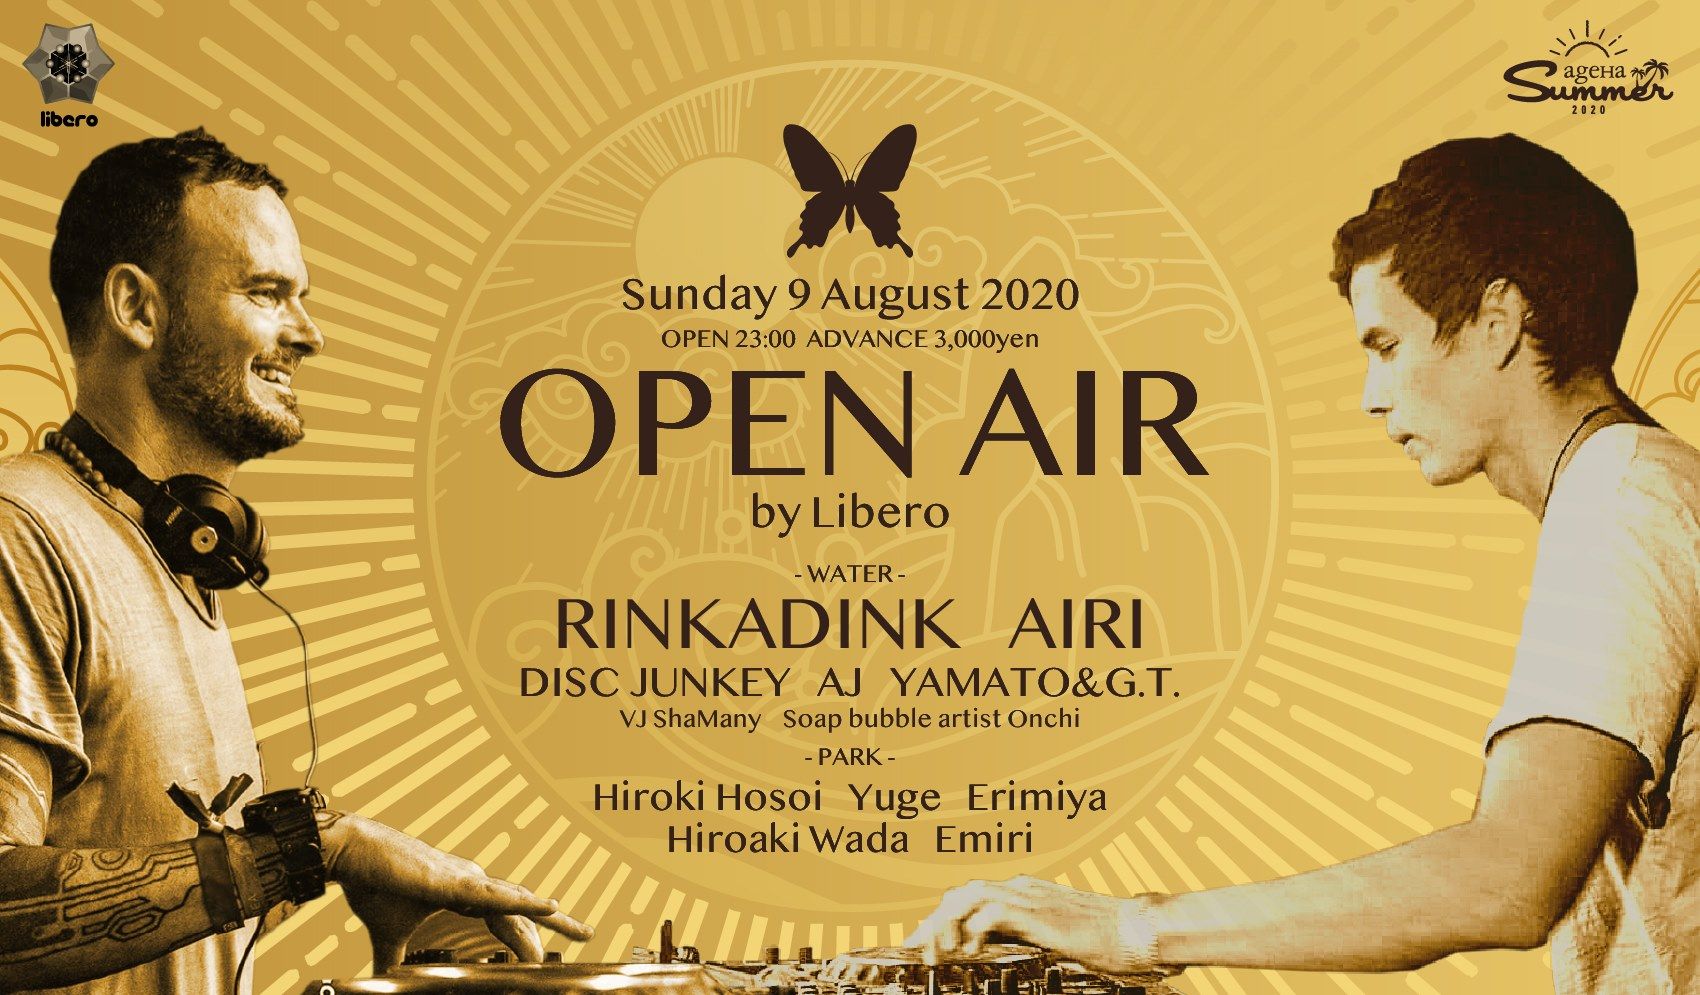 “OPEN AIR” by Libero